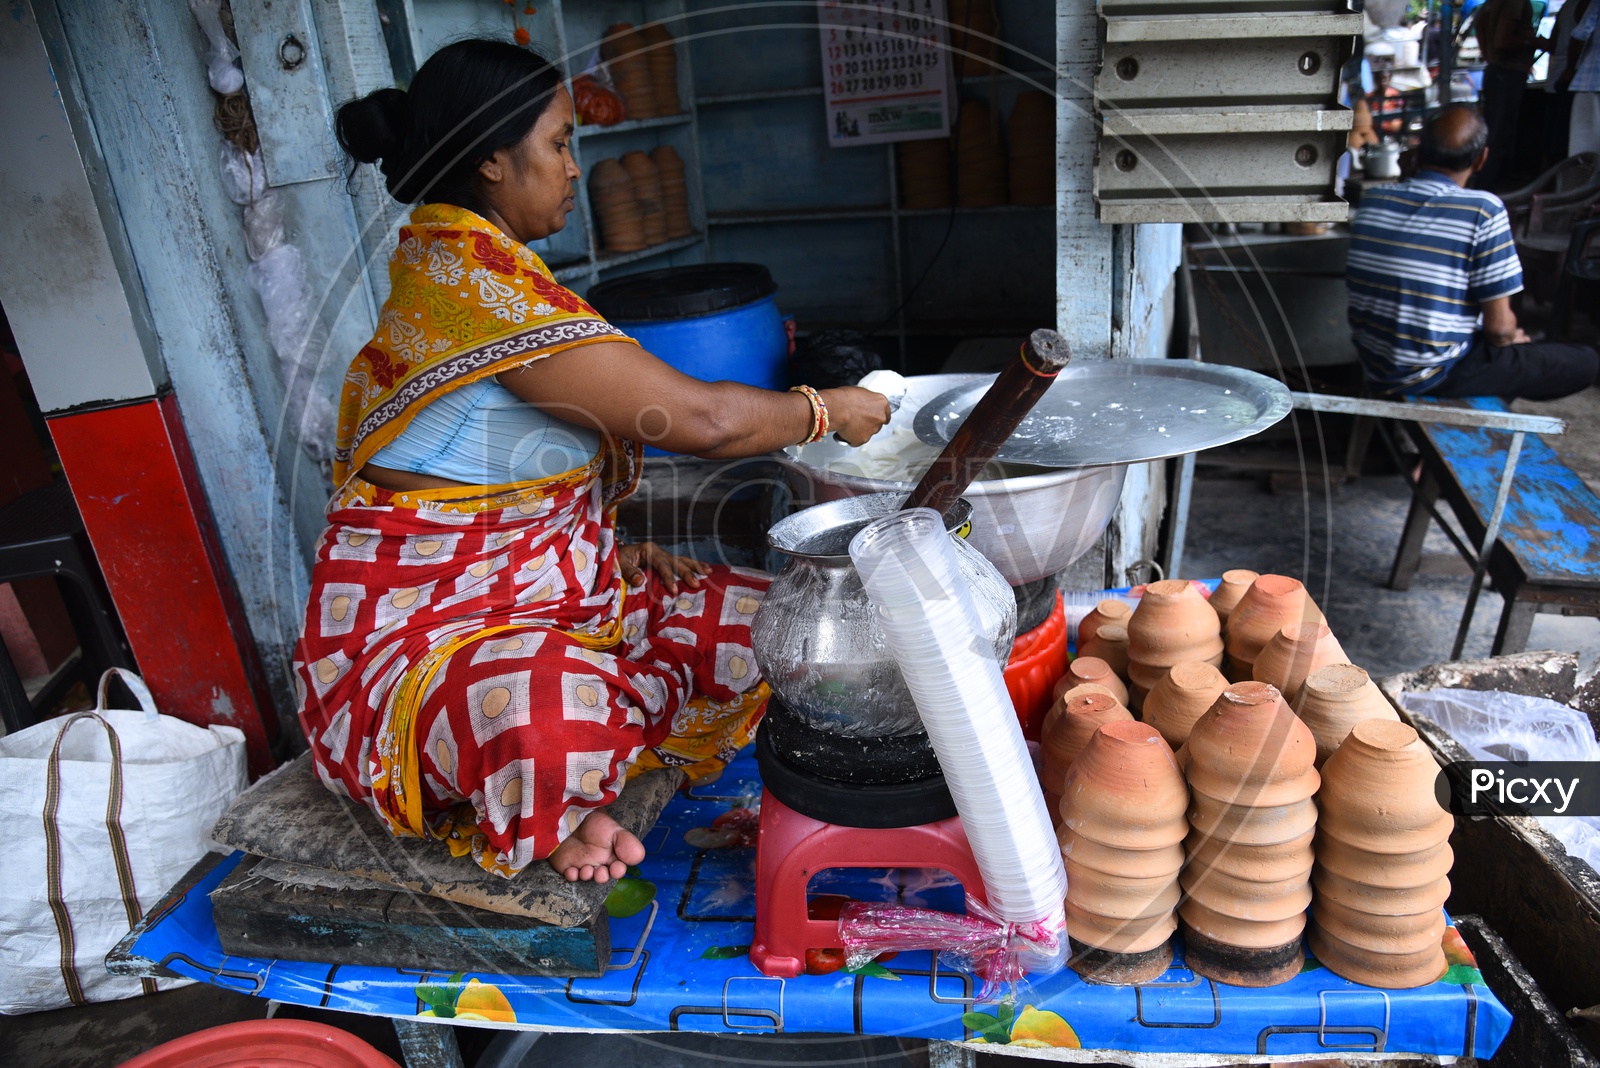 A Woman Vendor  Making Lassi  at a Vendor stall In Howrah